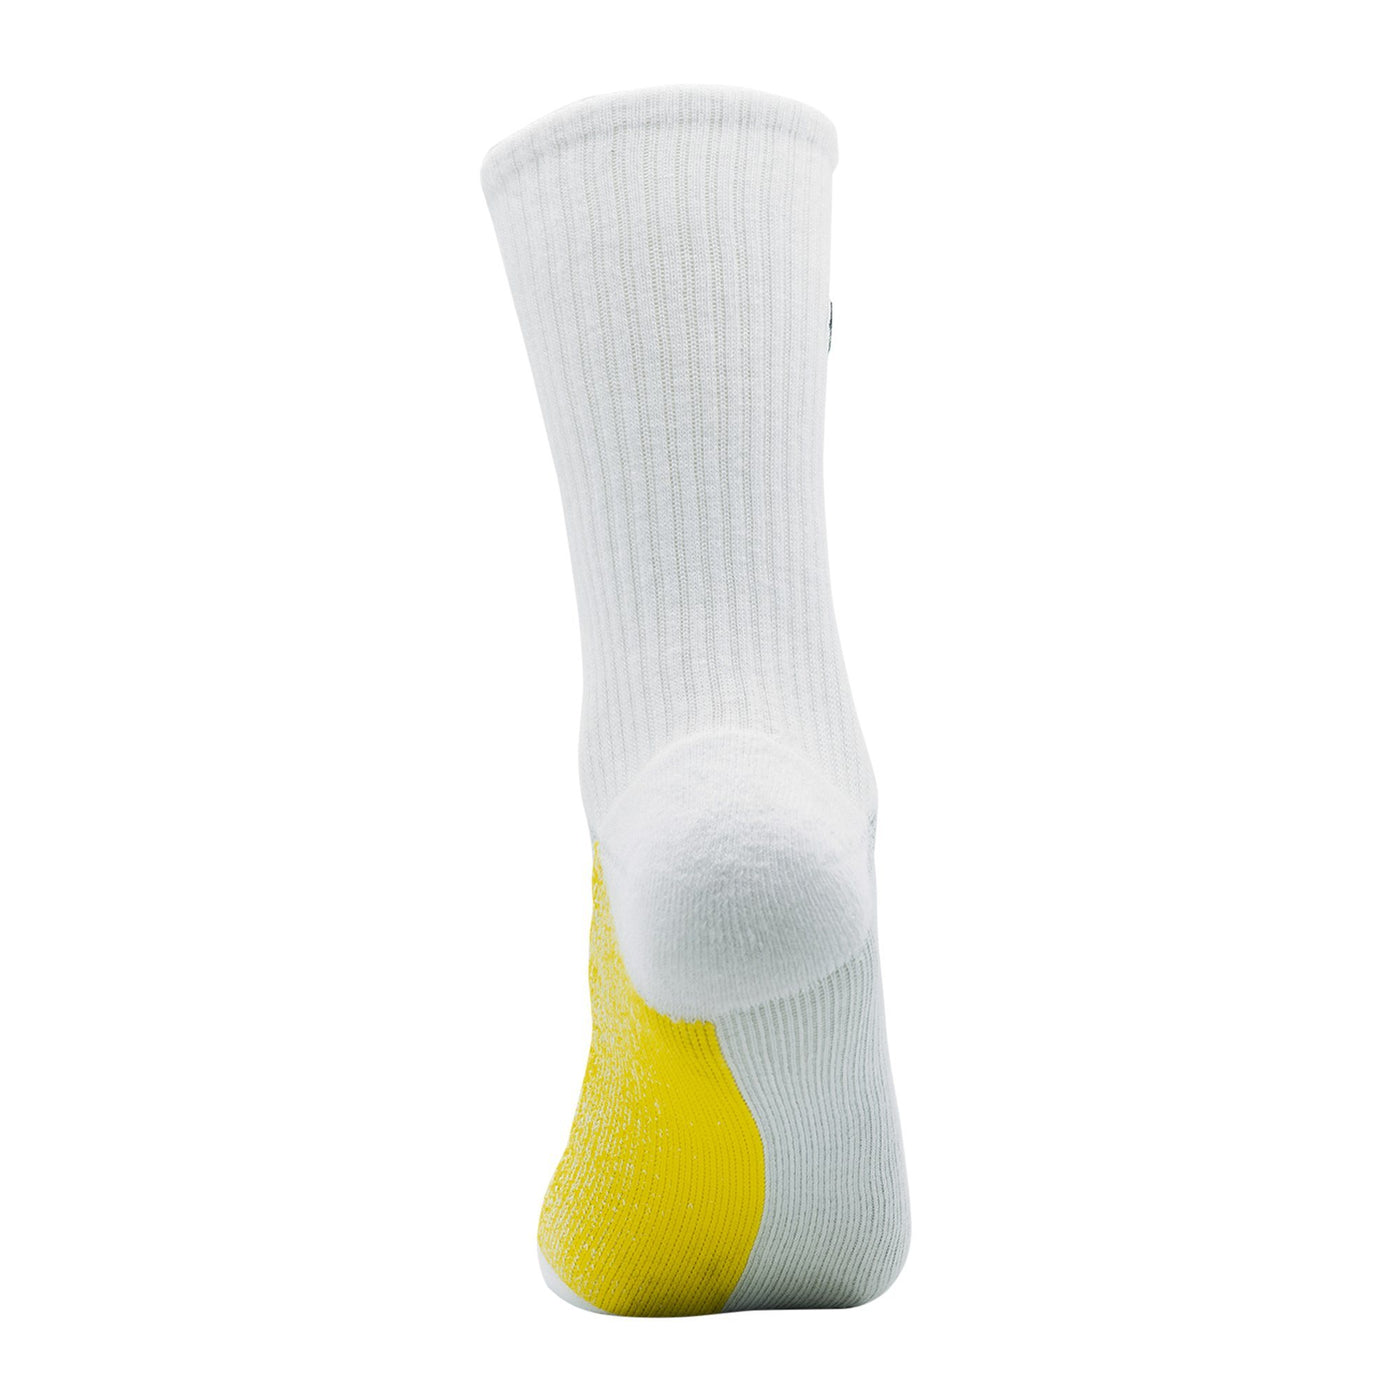 Athletic Crew Sock 6-Pack in White Improved Version athletic socks ArchTek